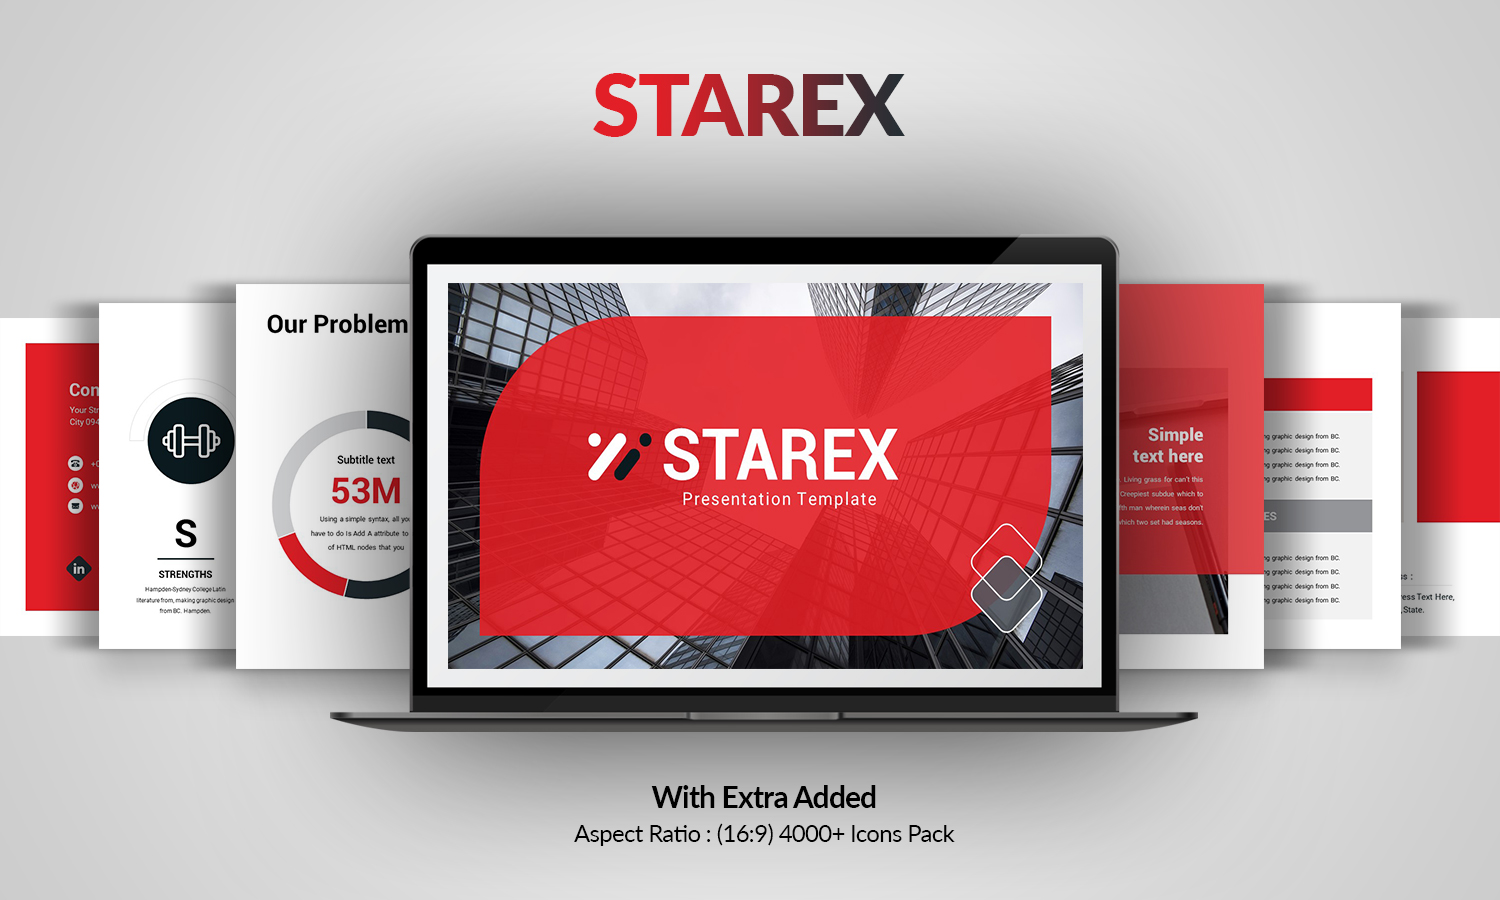 Starex PowerPoint Templates for Presentation